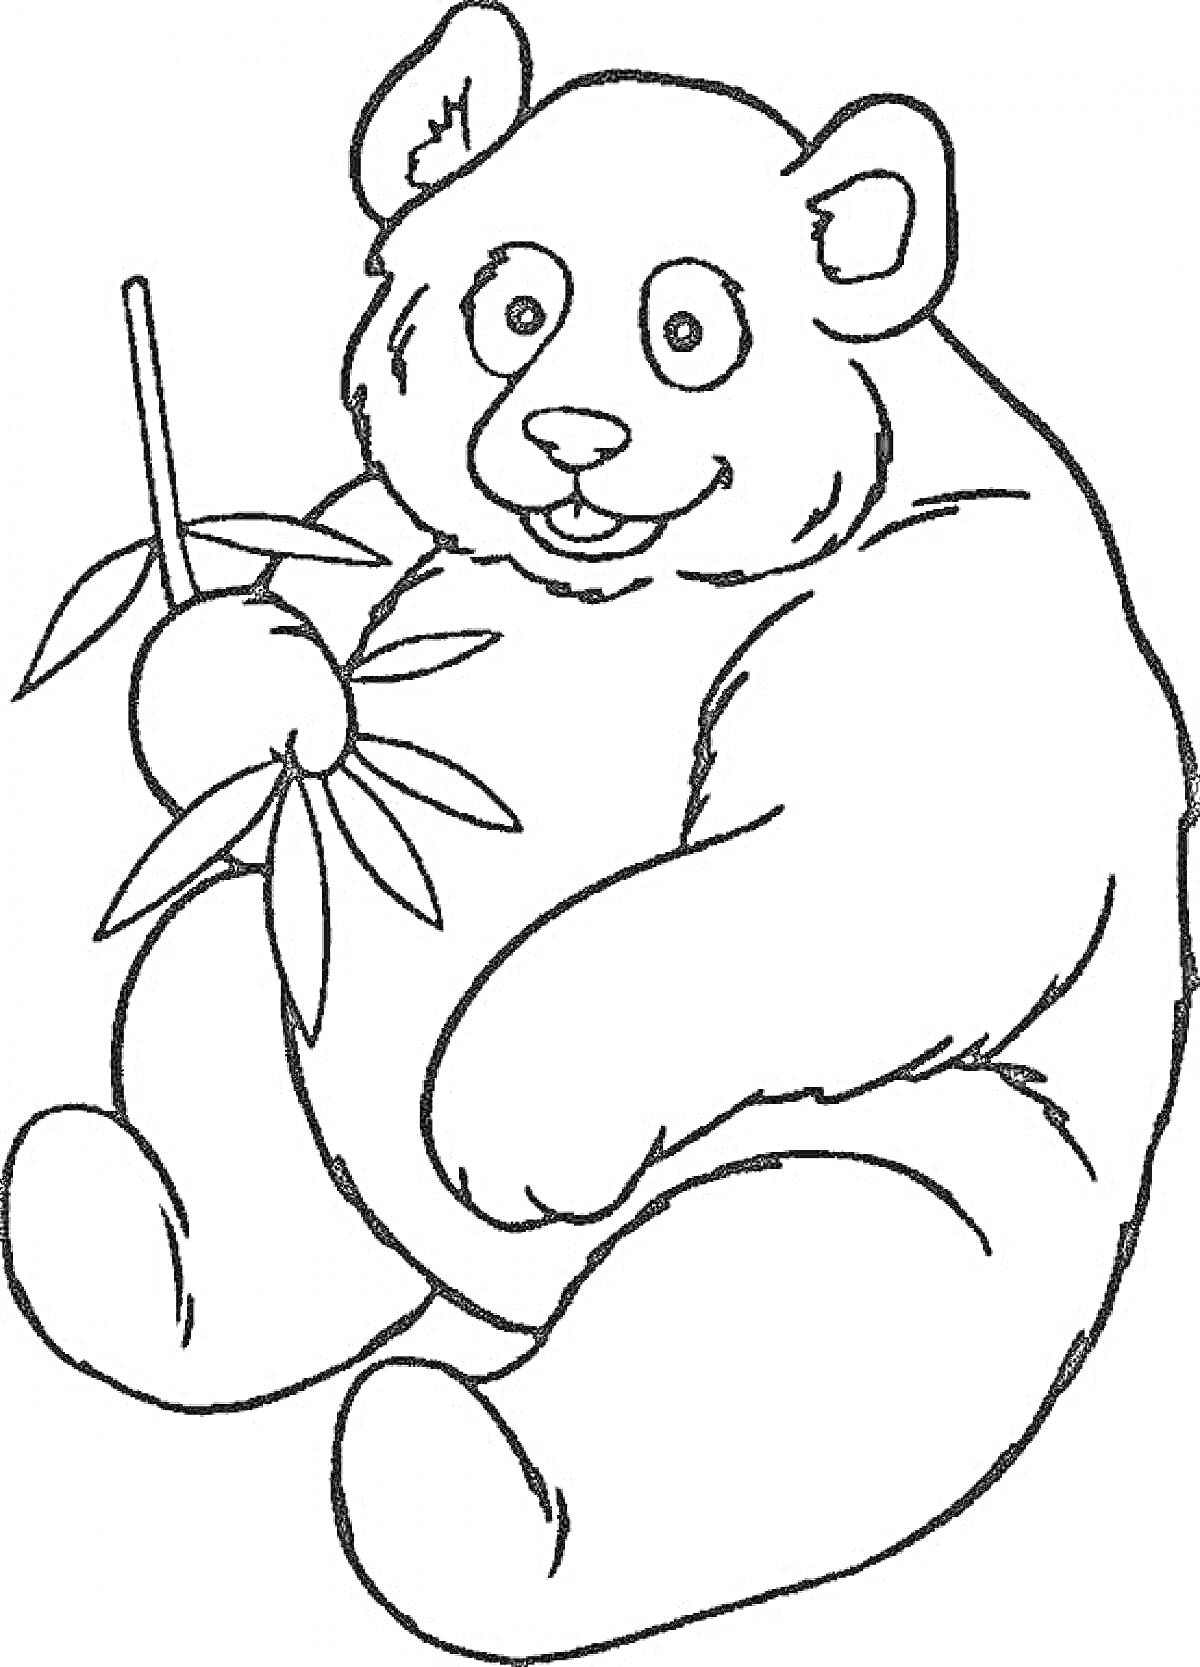 Раскраска Медведь с веткой бамбука